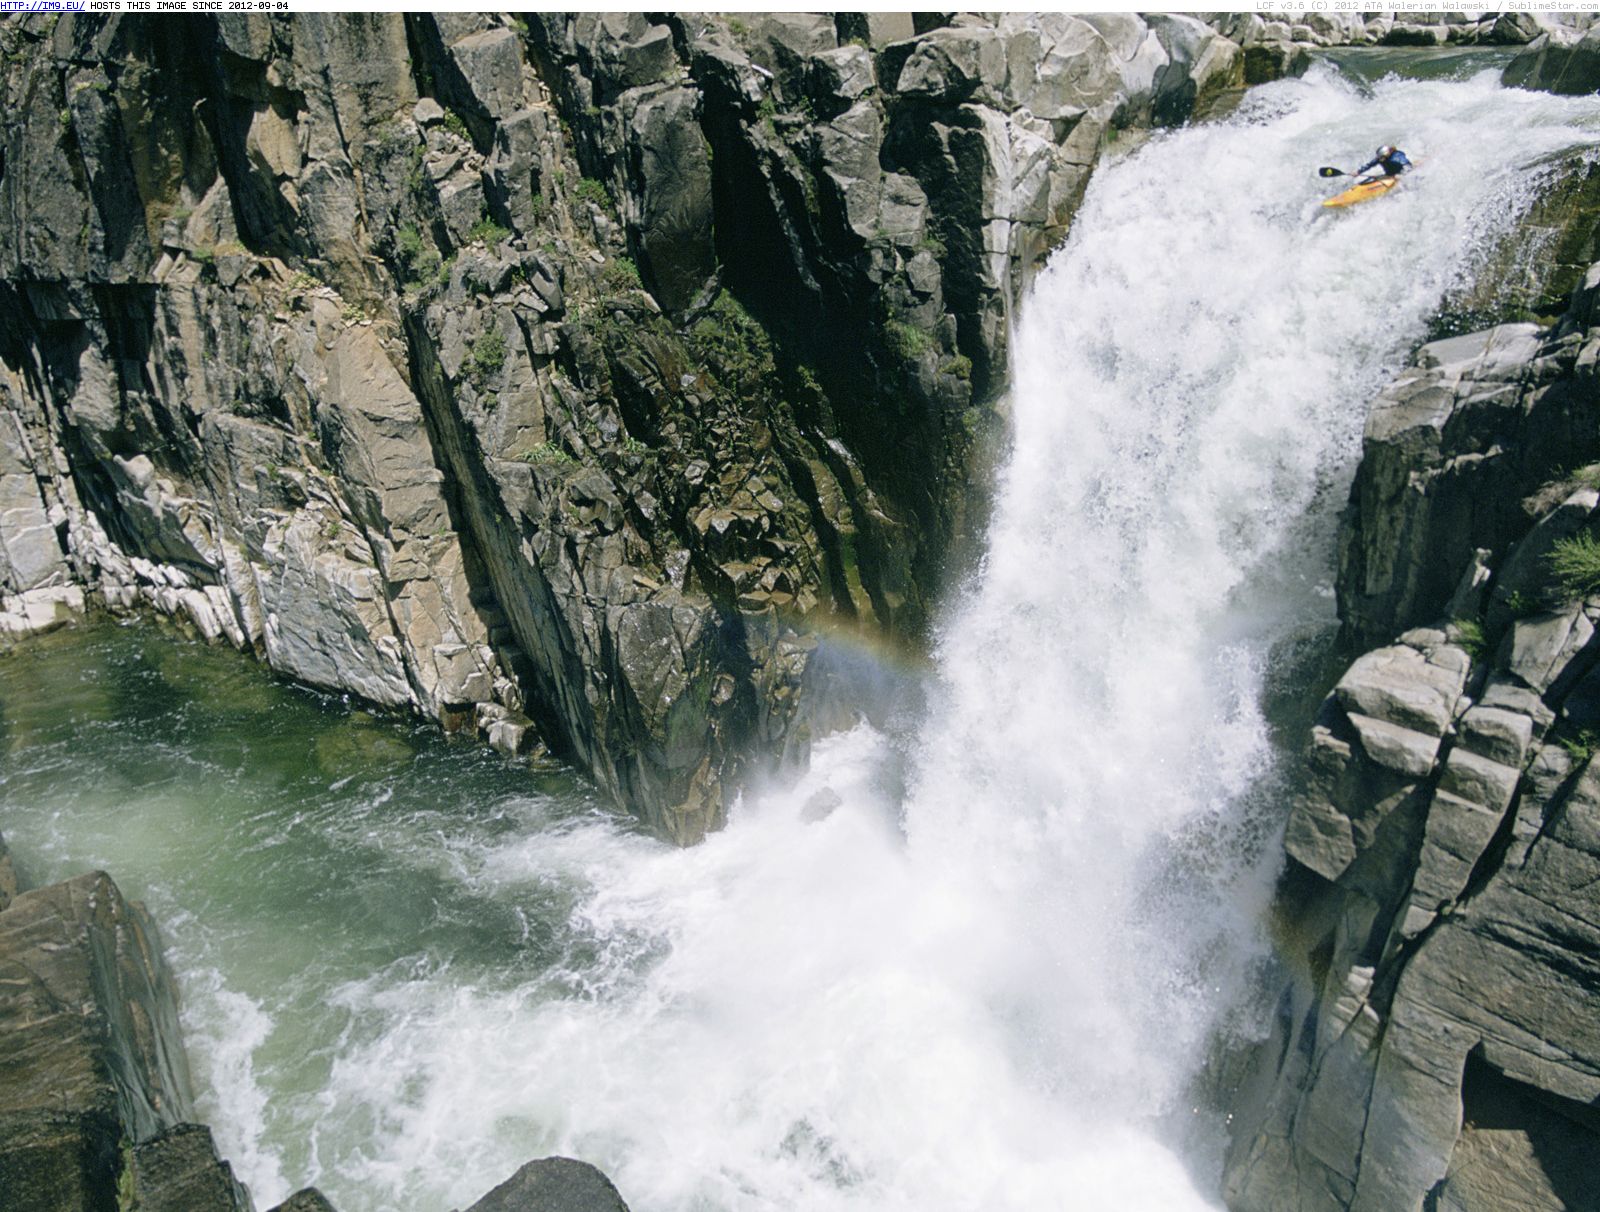 Extreme Kayaker Descending Rattlesnake Falls, American River, California (in Beautiful photos and wallpapers)